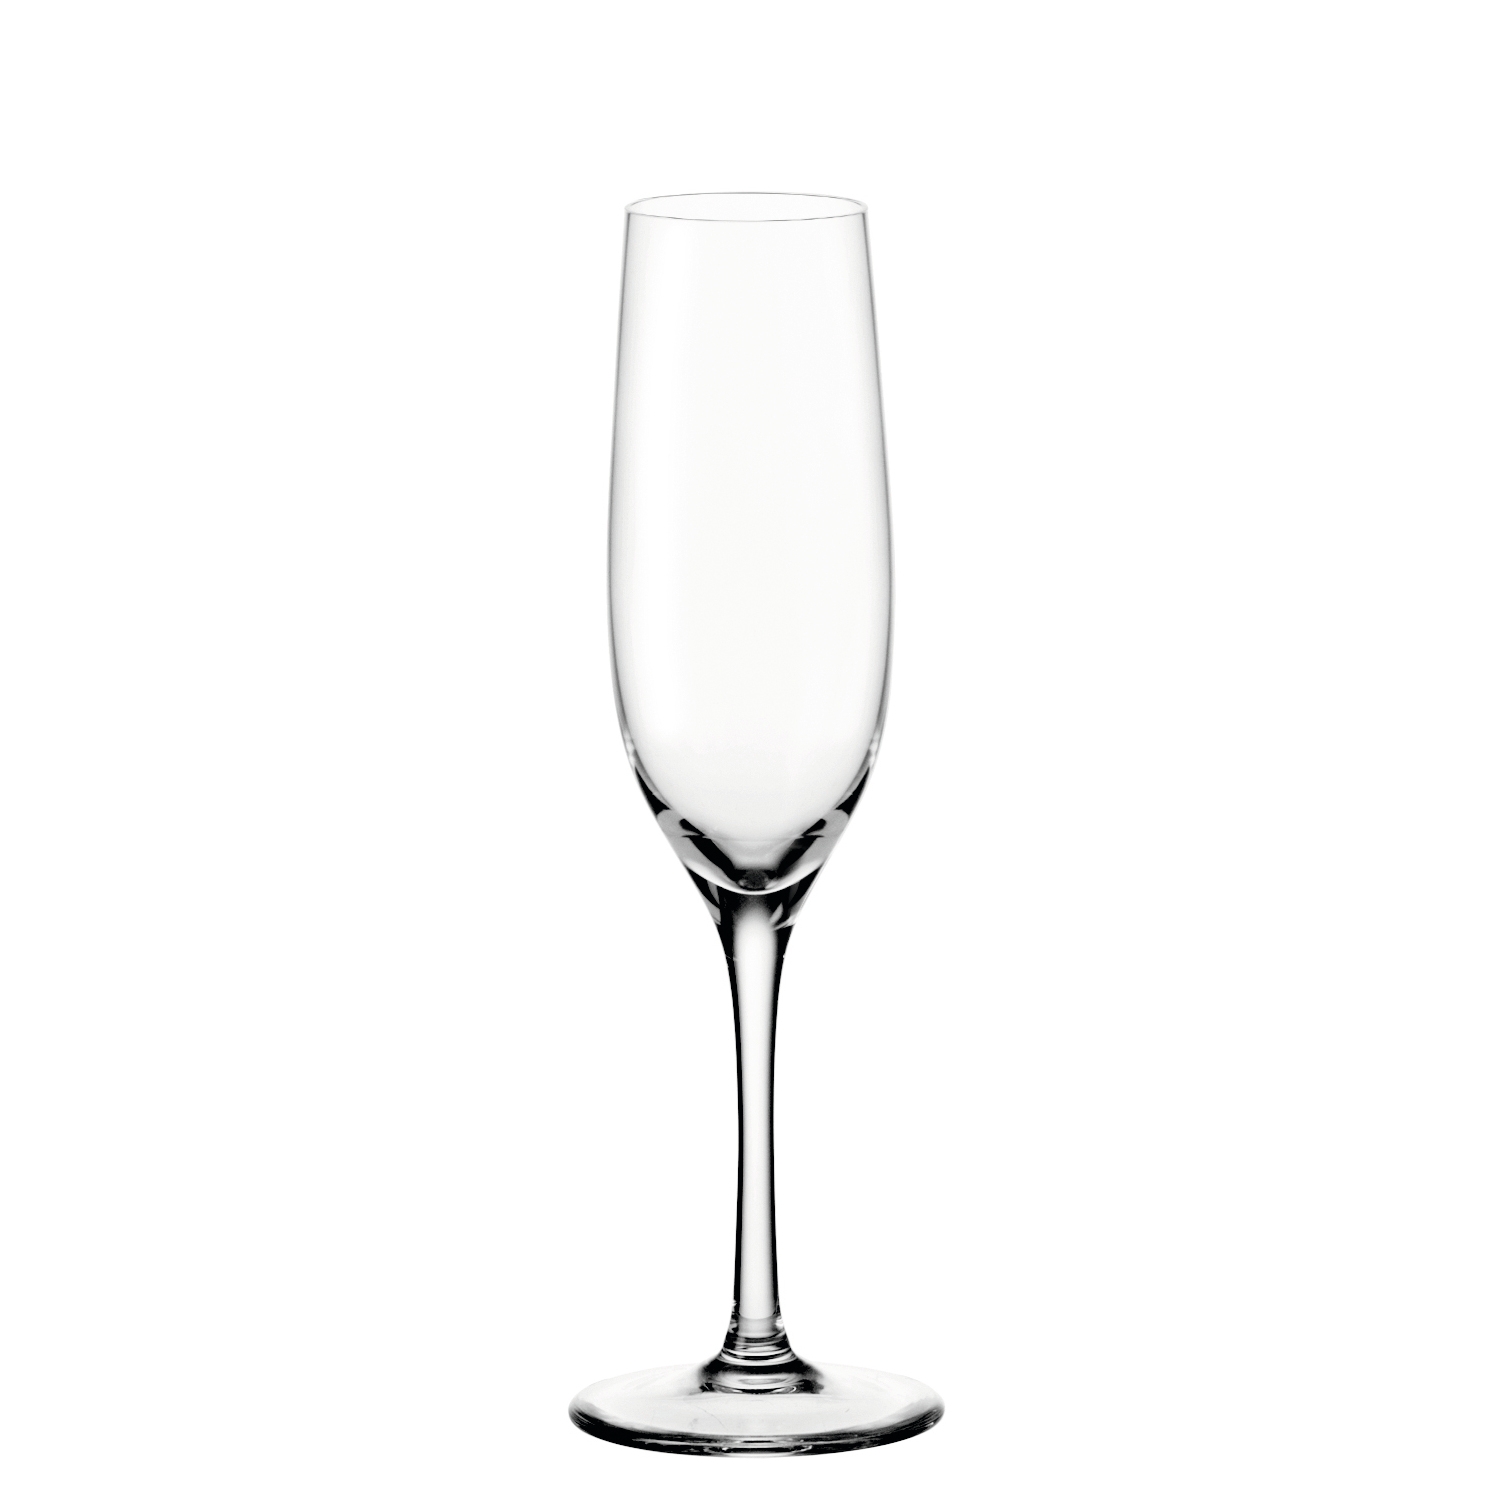  Sektglas   Ciao+    Maße: 22,5 x 6,7 x 6,7 cm (HxBxT) 